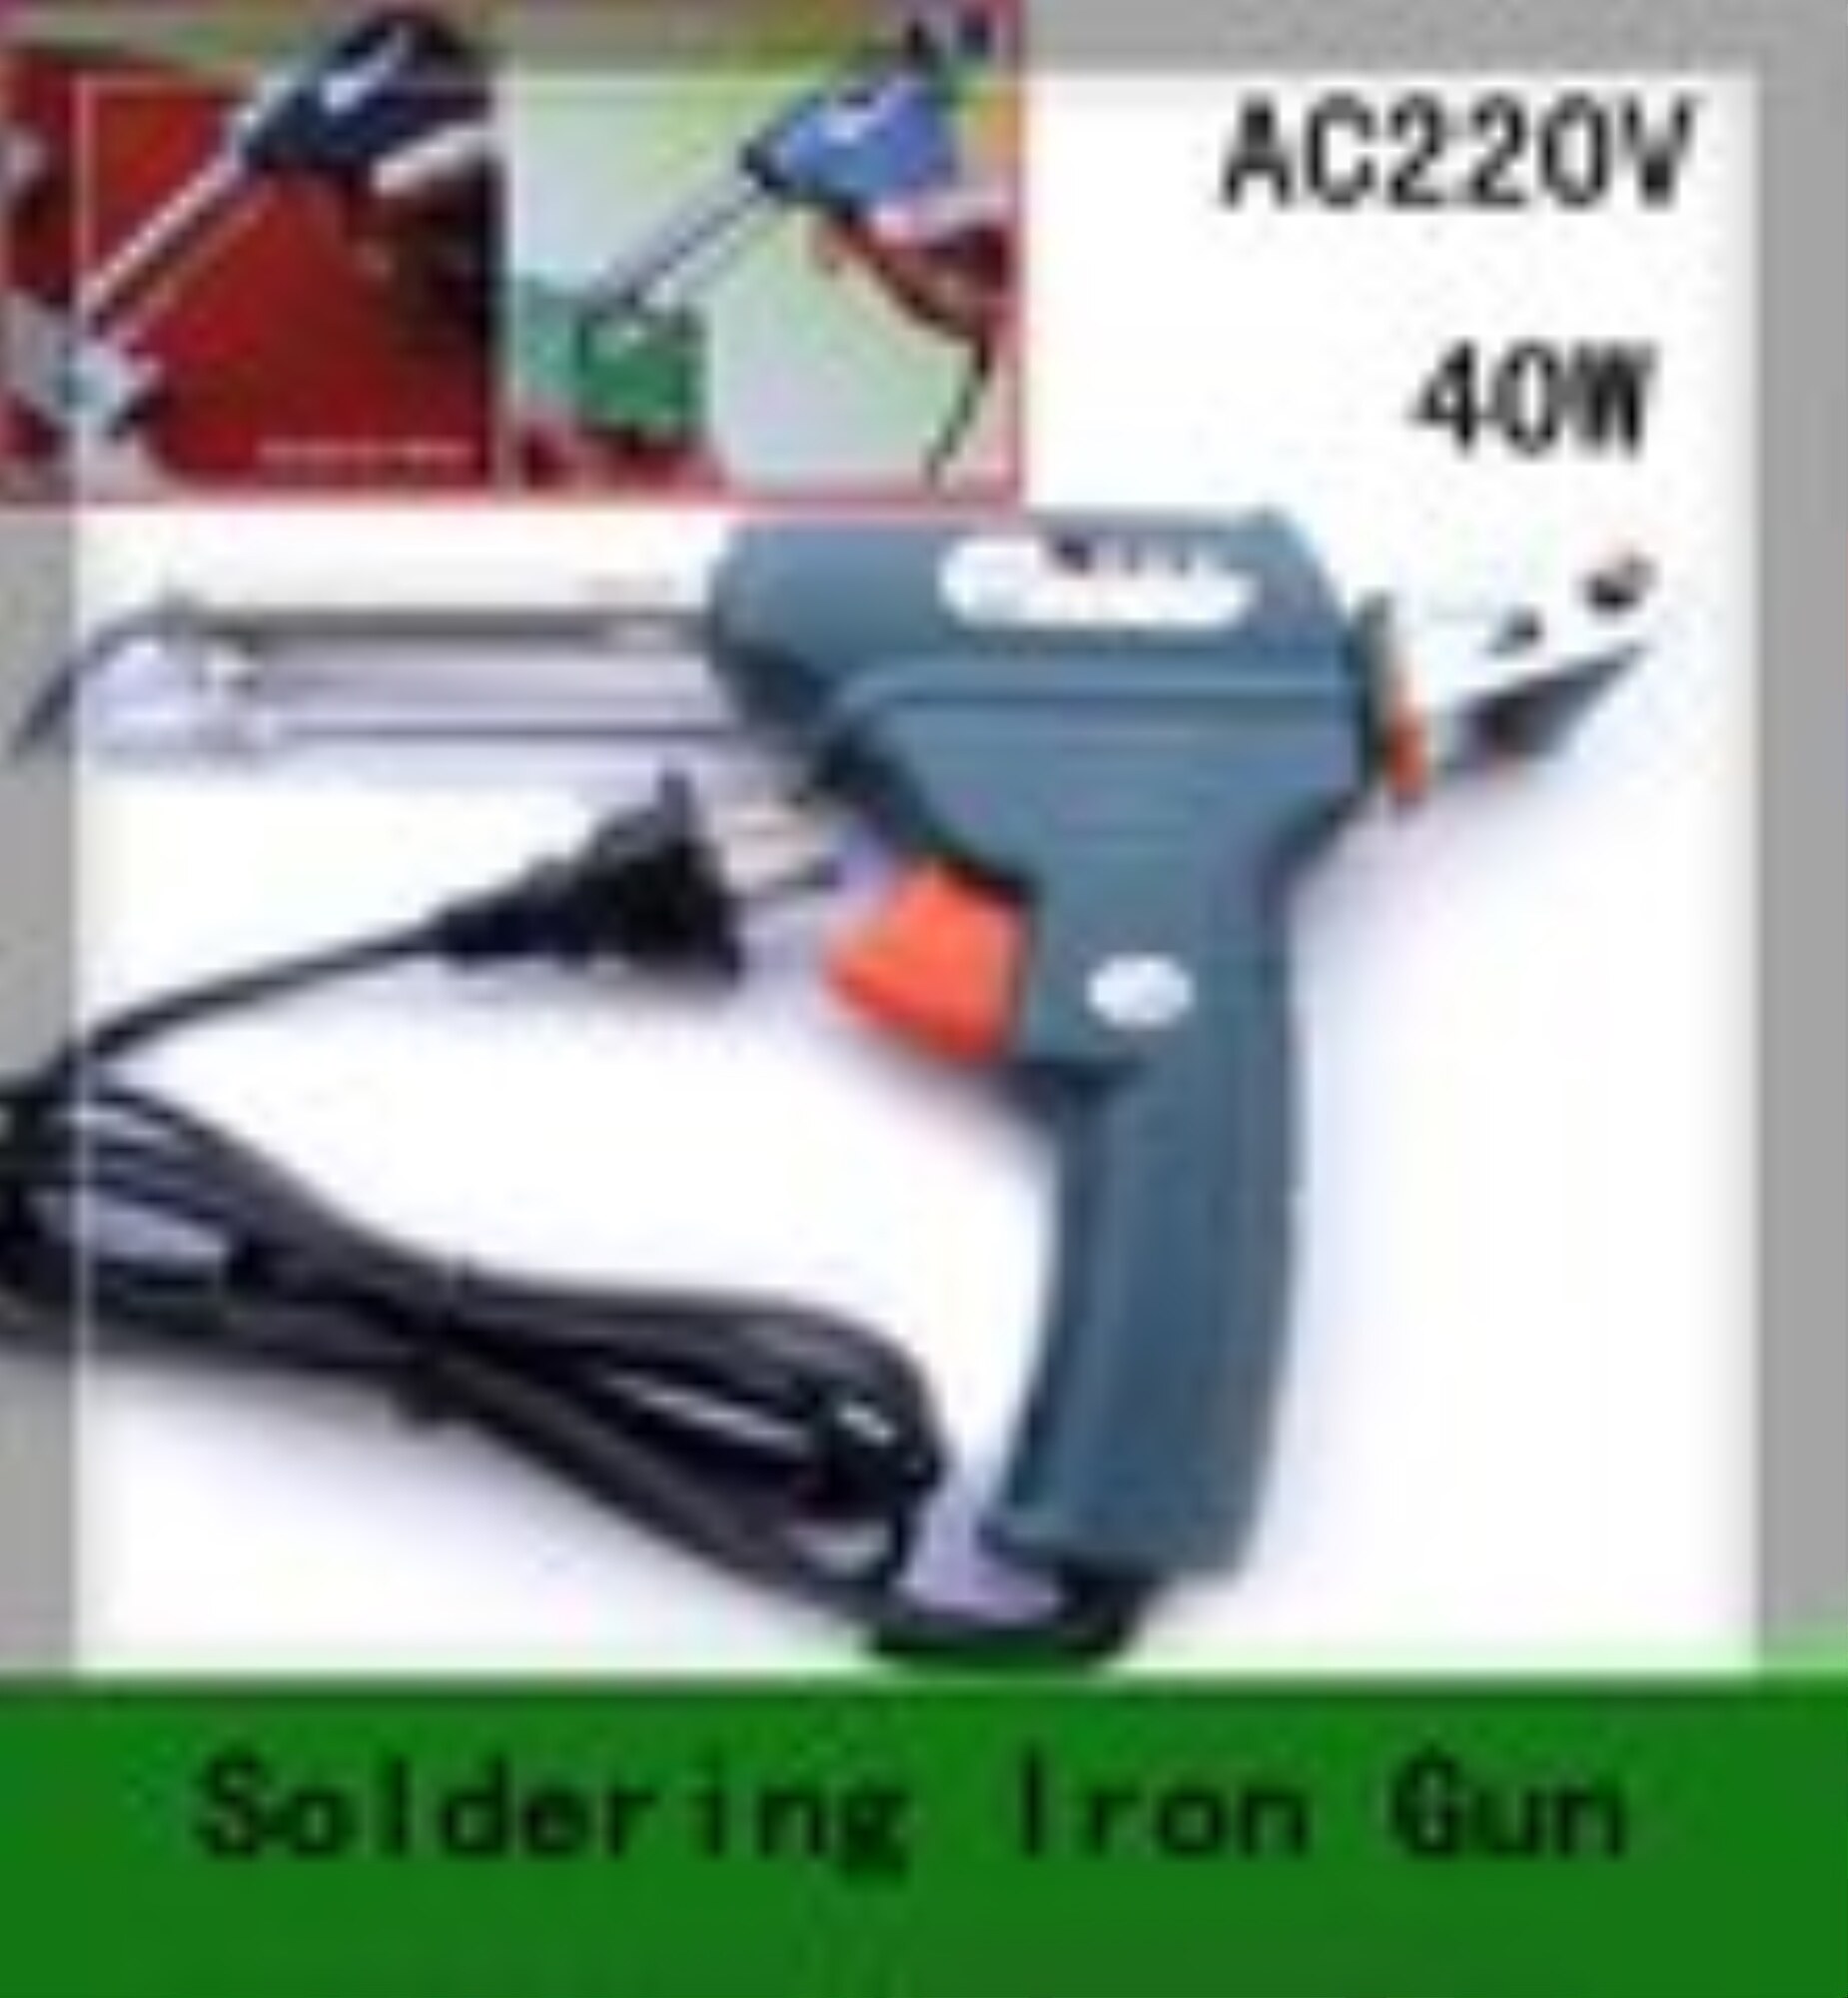 1pc-AC-220V-40W-Automatic-Send-Solder-wire-Soldering-Iron-Gun-Welding-With-stand.jpg_120x120.jpg